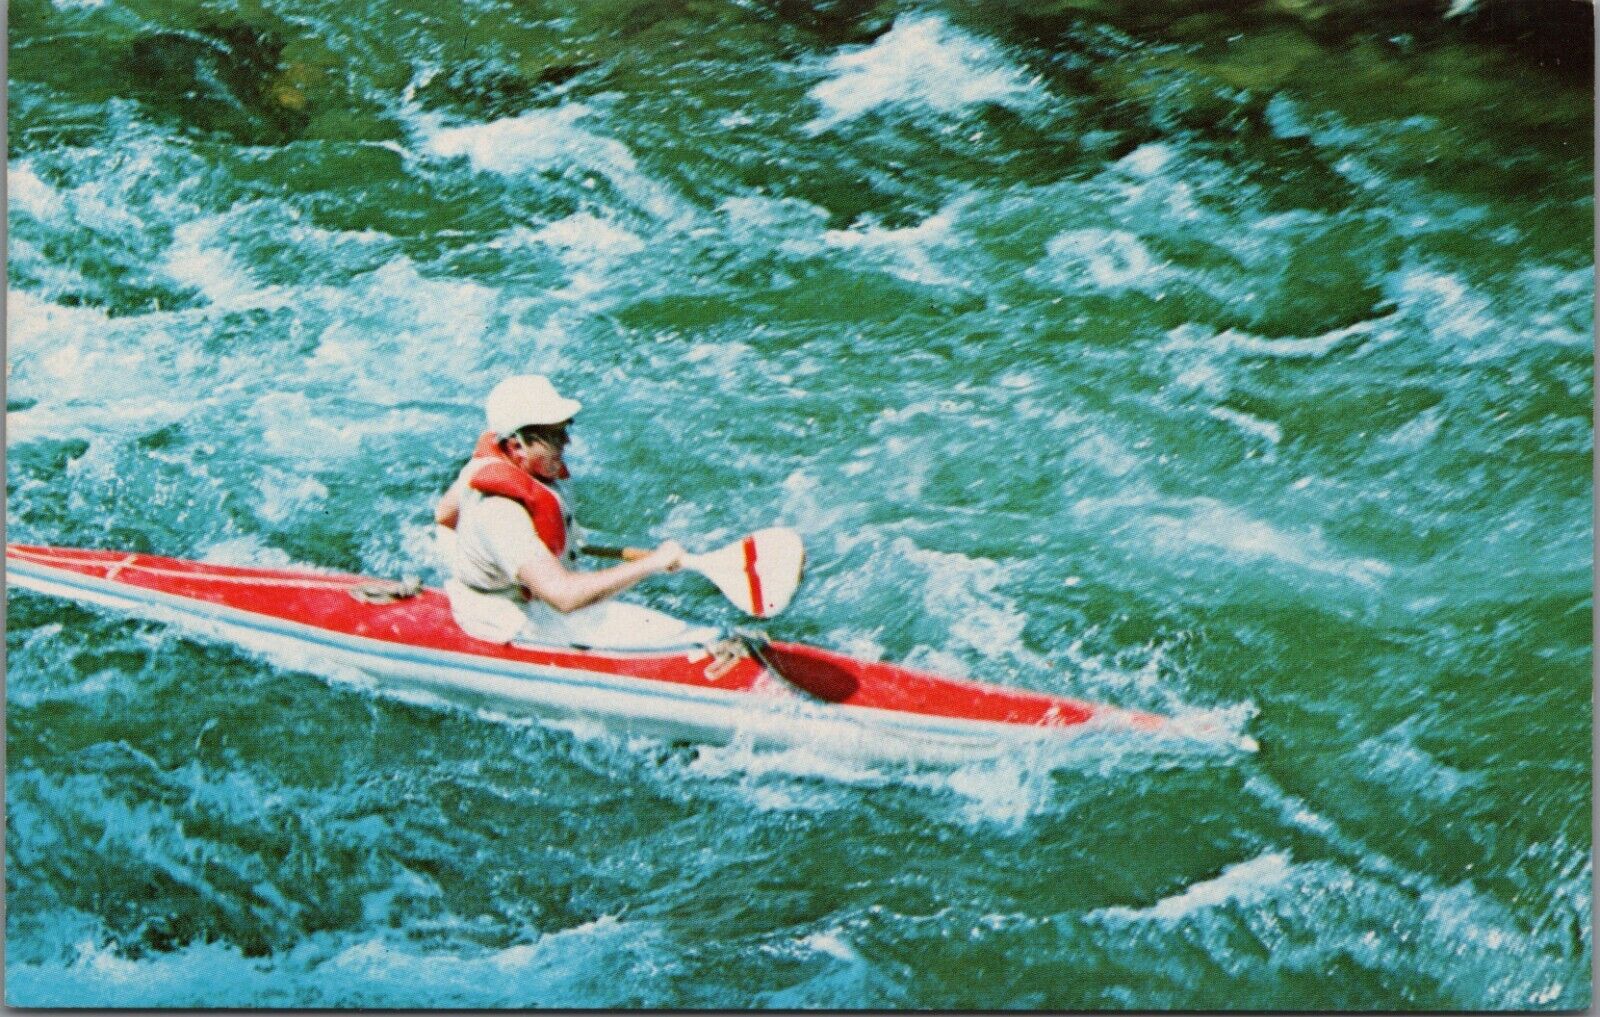 Kayaking Class III Whitewater Rapids Lower Nantahala River Gorge Falls NC UNP